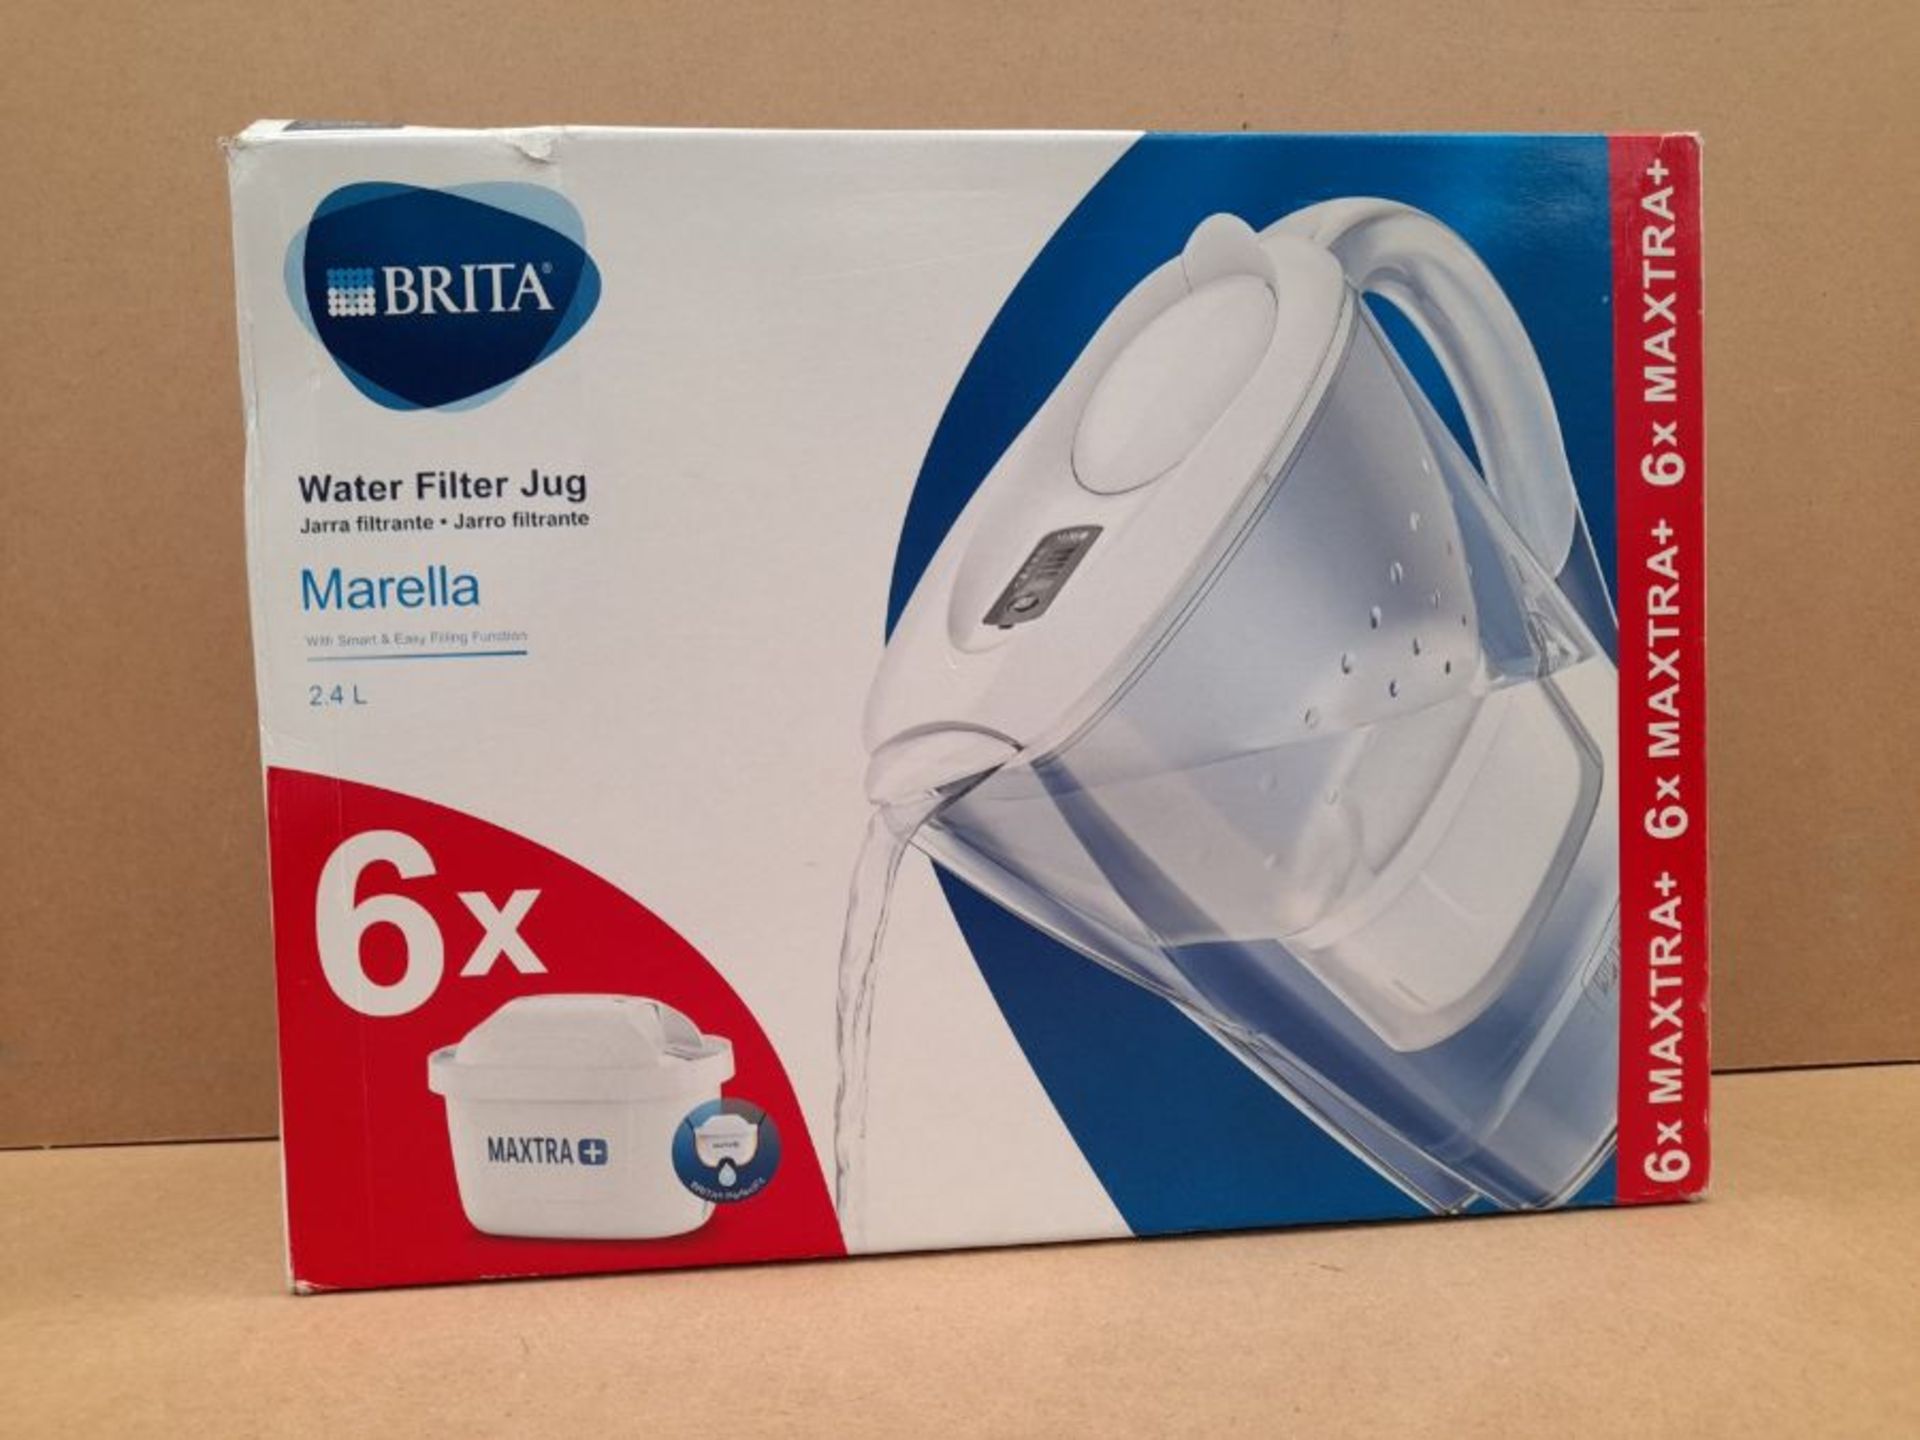 BRITA Marella Fridge water filter jug for reduction of chlorine, limescale and impuiti - Image 2 of 3